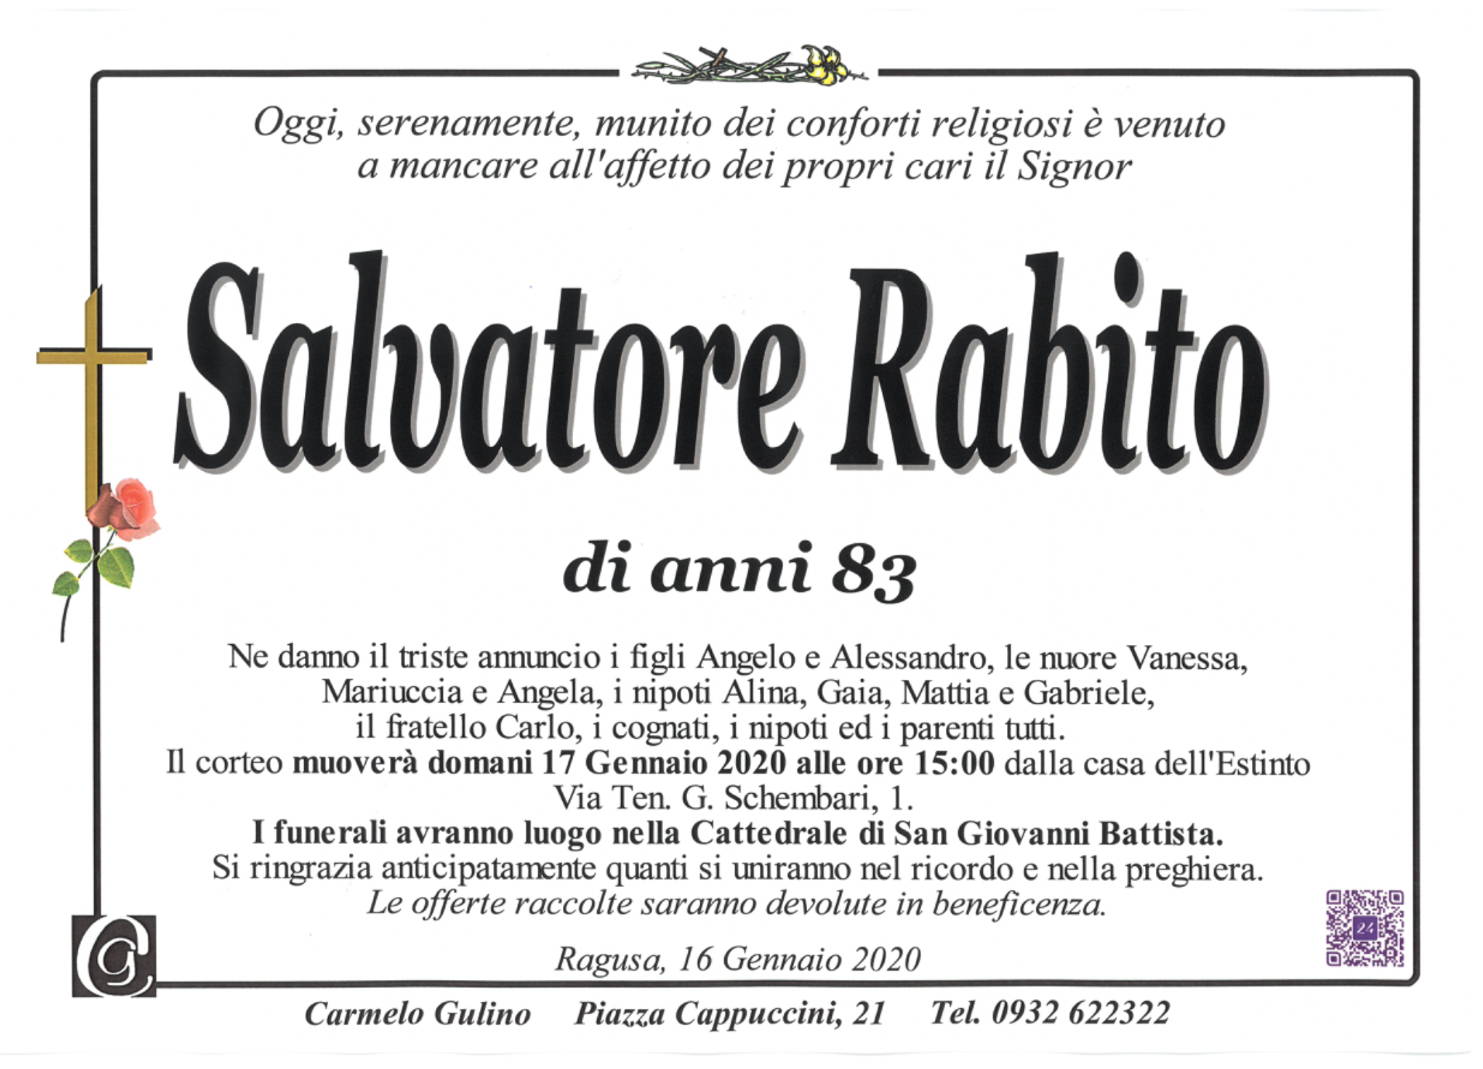 Salvatore Rabito